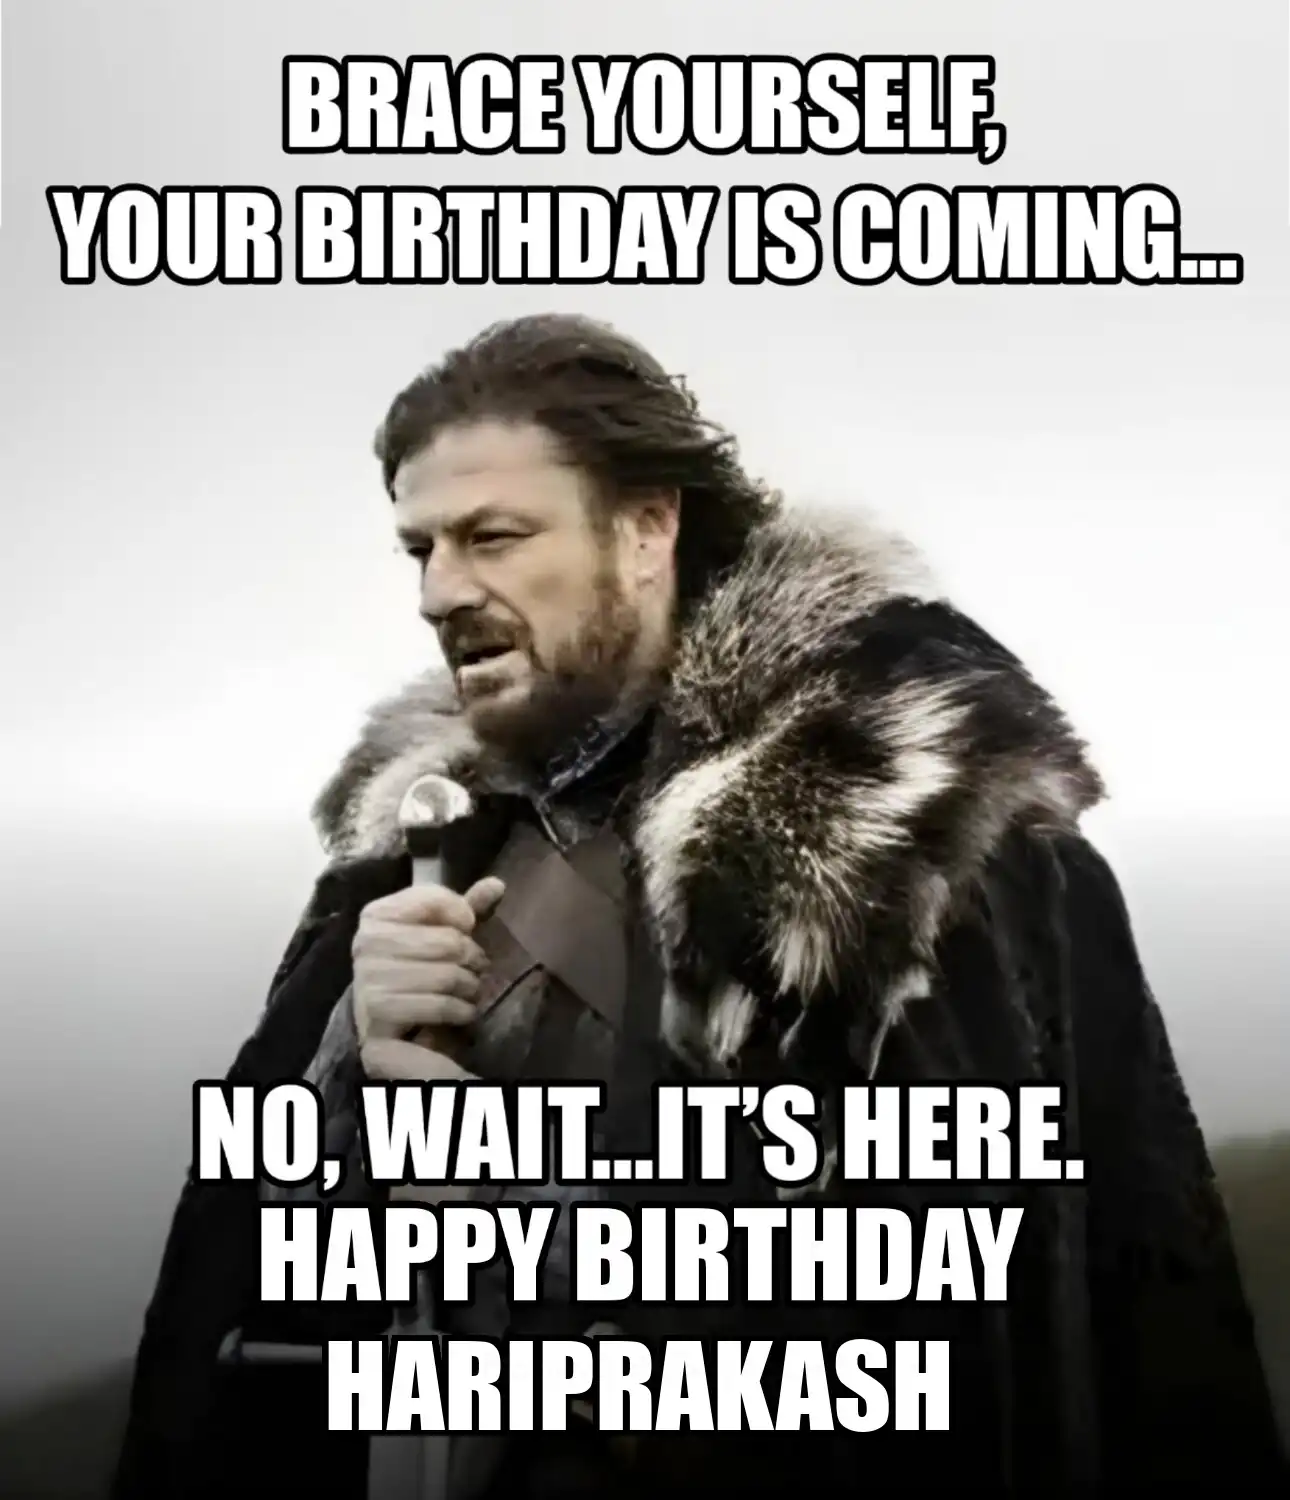 Happy Birthday Hariprakash Brace Yourself Your Birthday Is Coming Meme